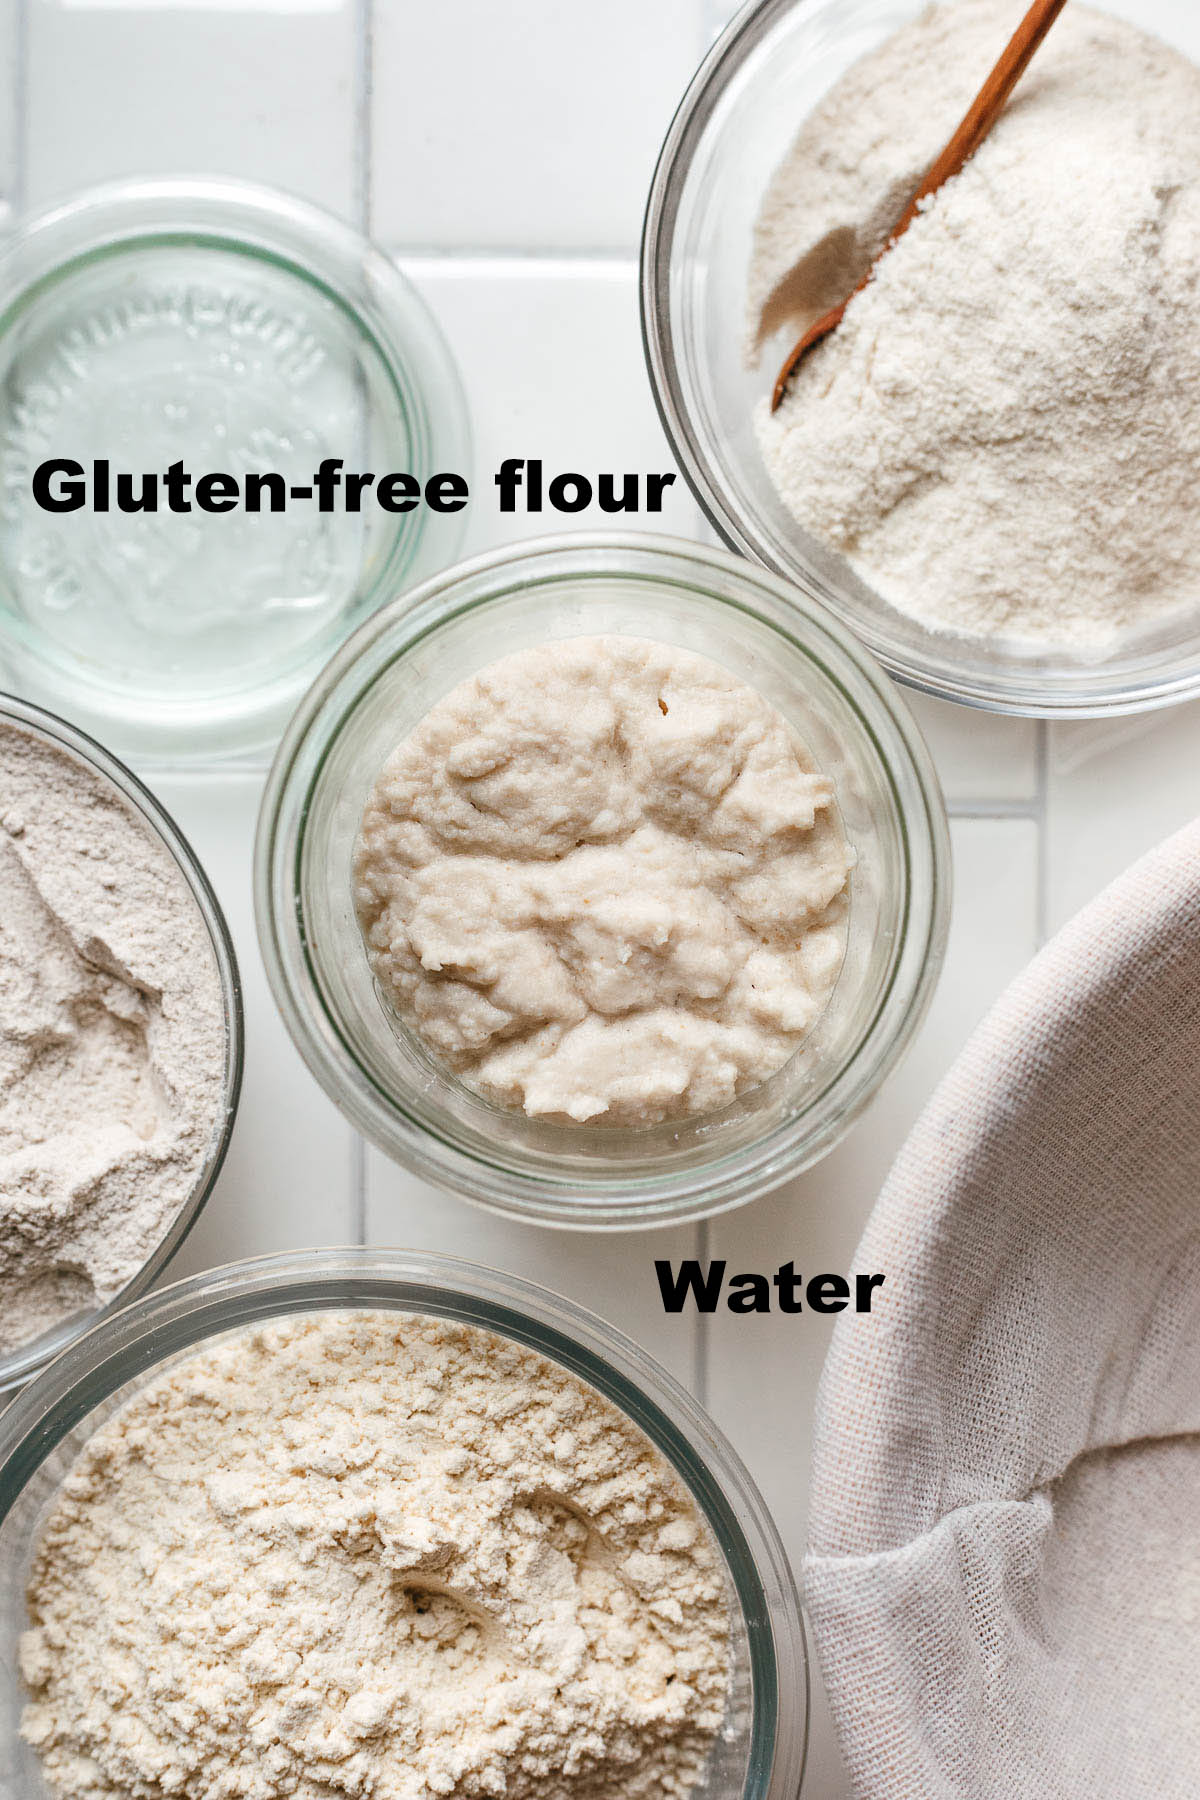 Gluten-free starter ingredients with labels.